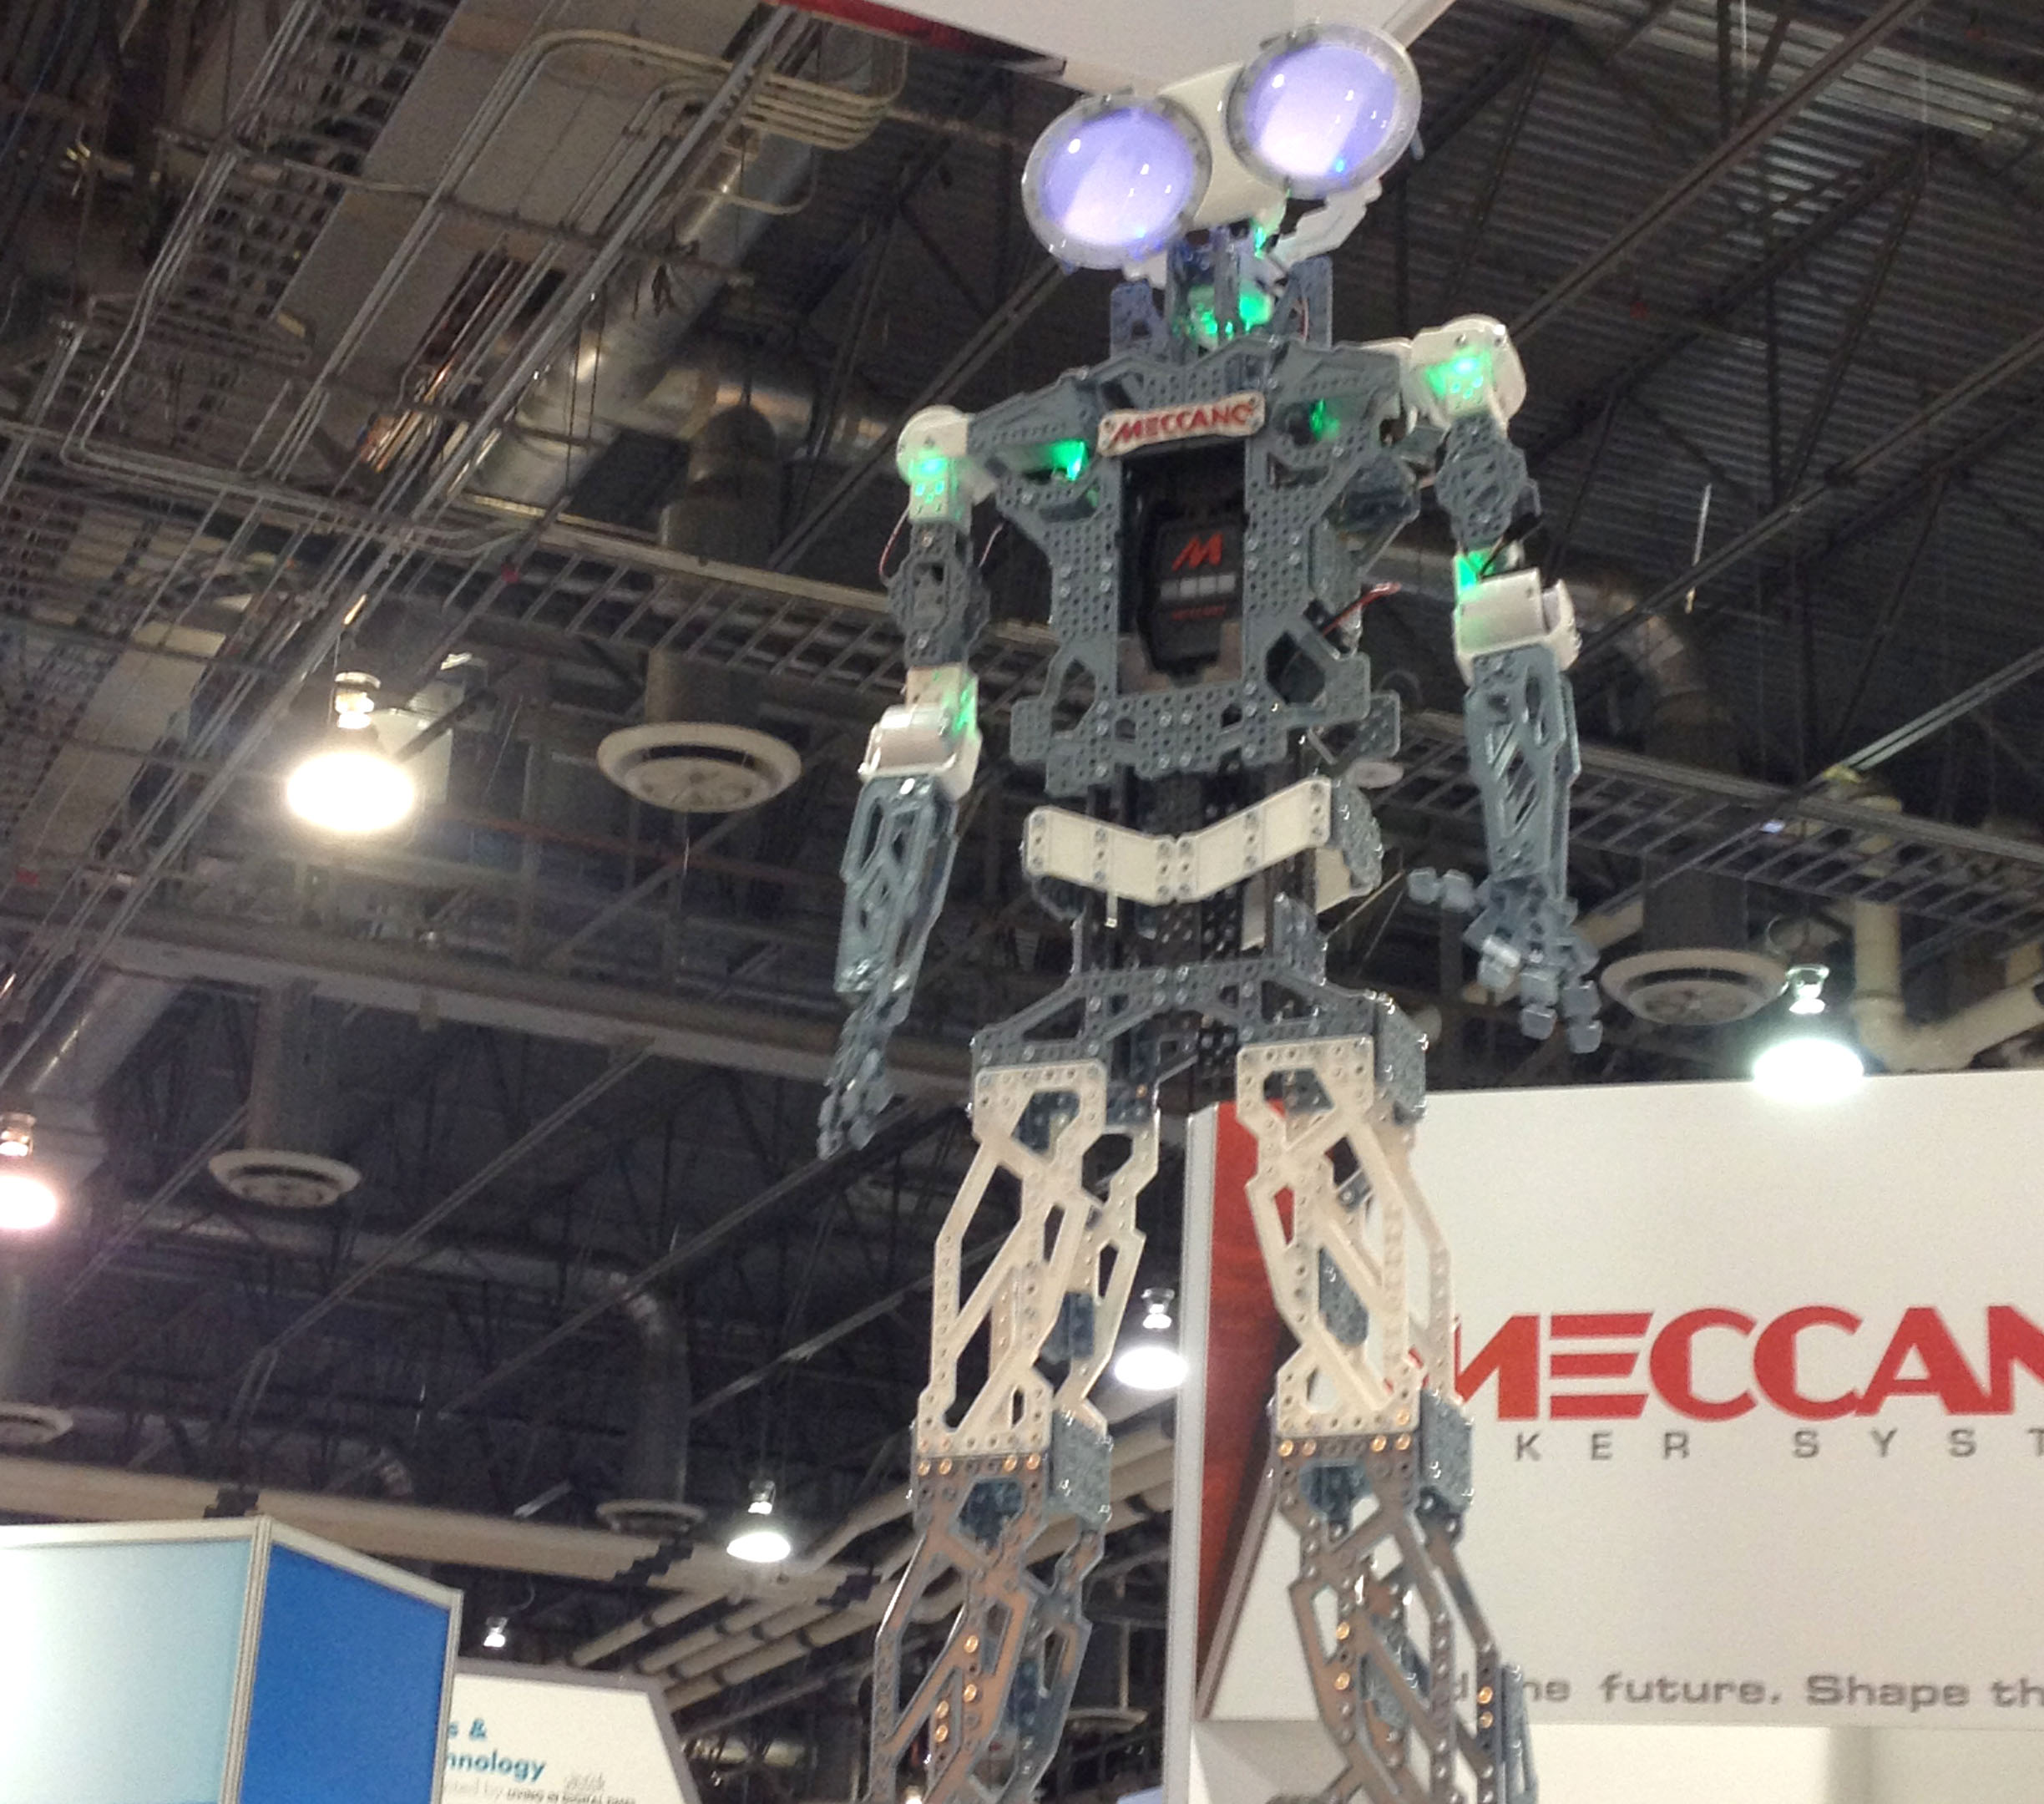 CES 2015: A Life-Size Erector Set Robot Kit